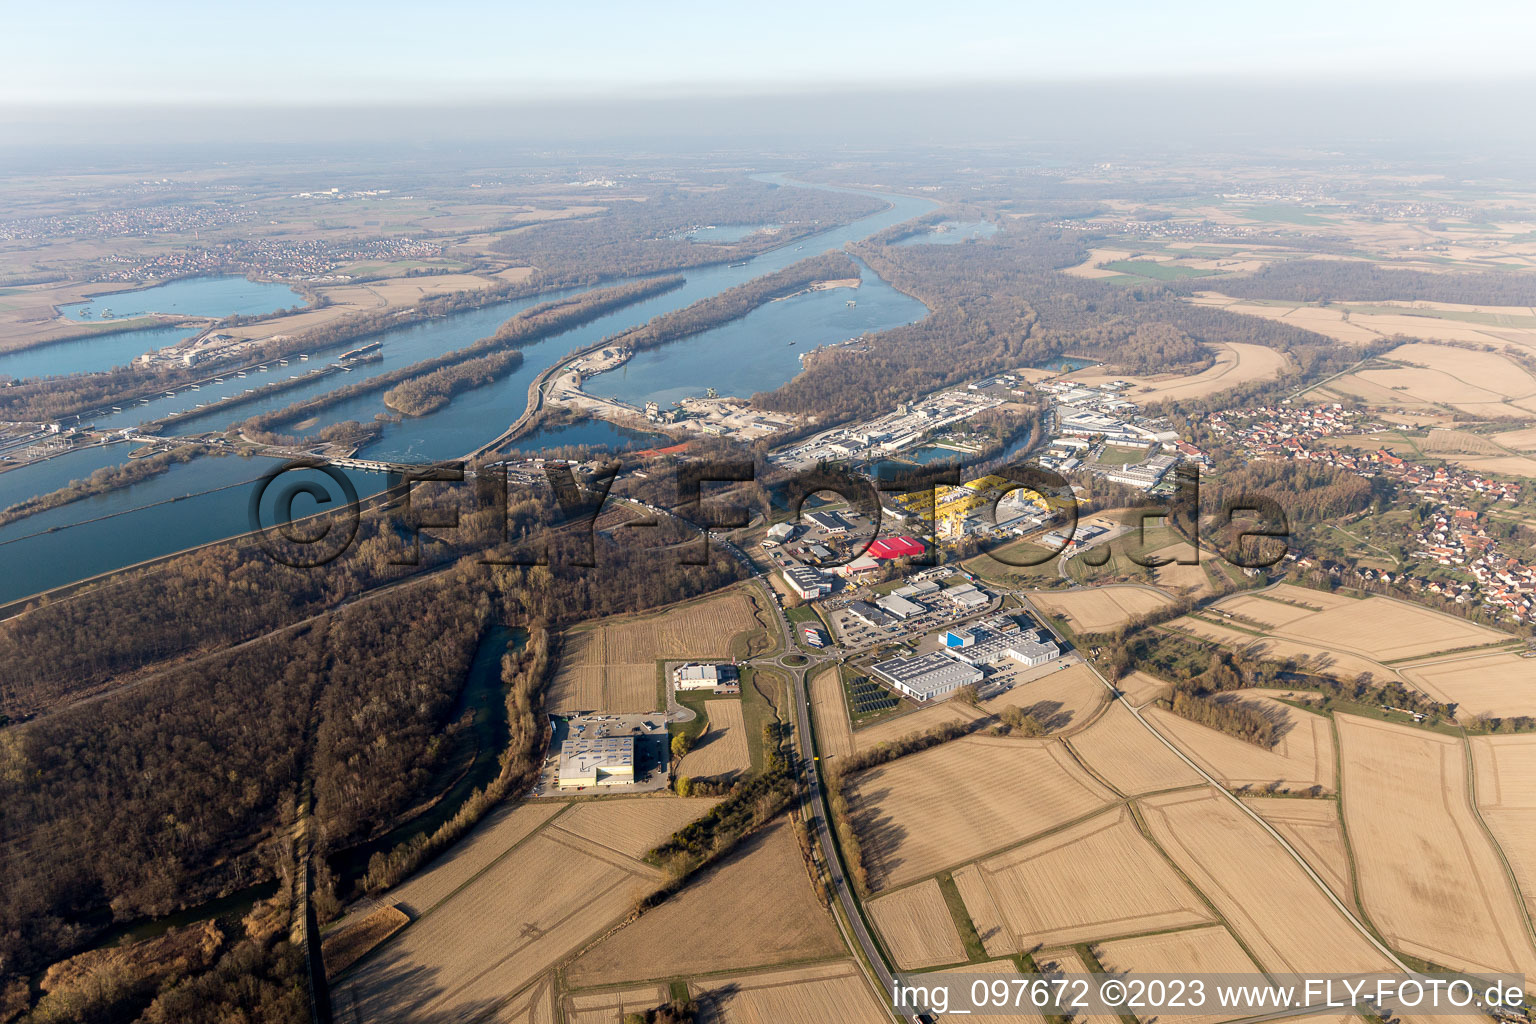 District Freistett in Rheinau in the state Baden-Wuerttemberg, Germany seen from a drone